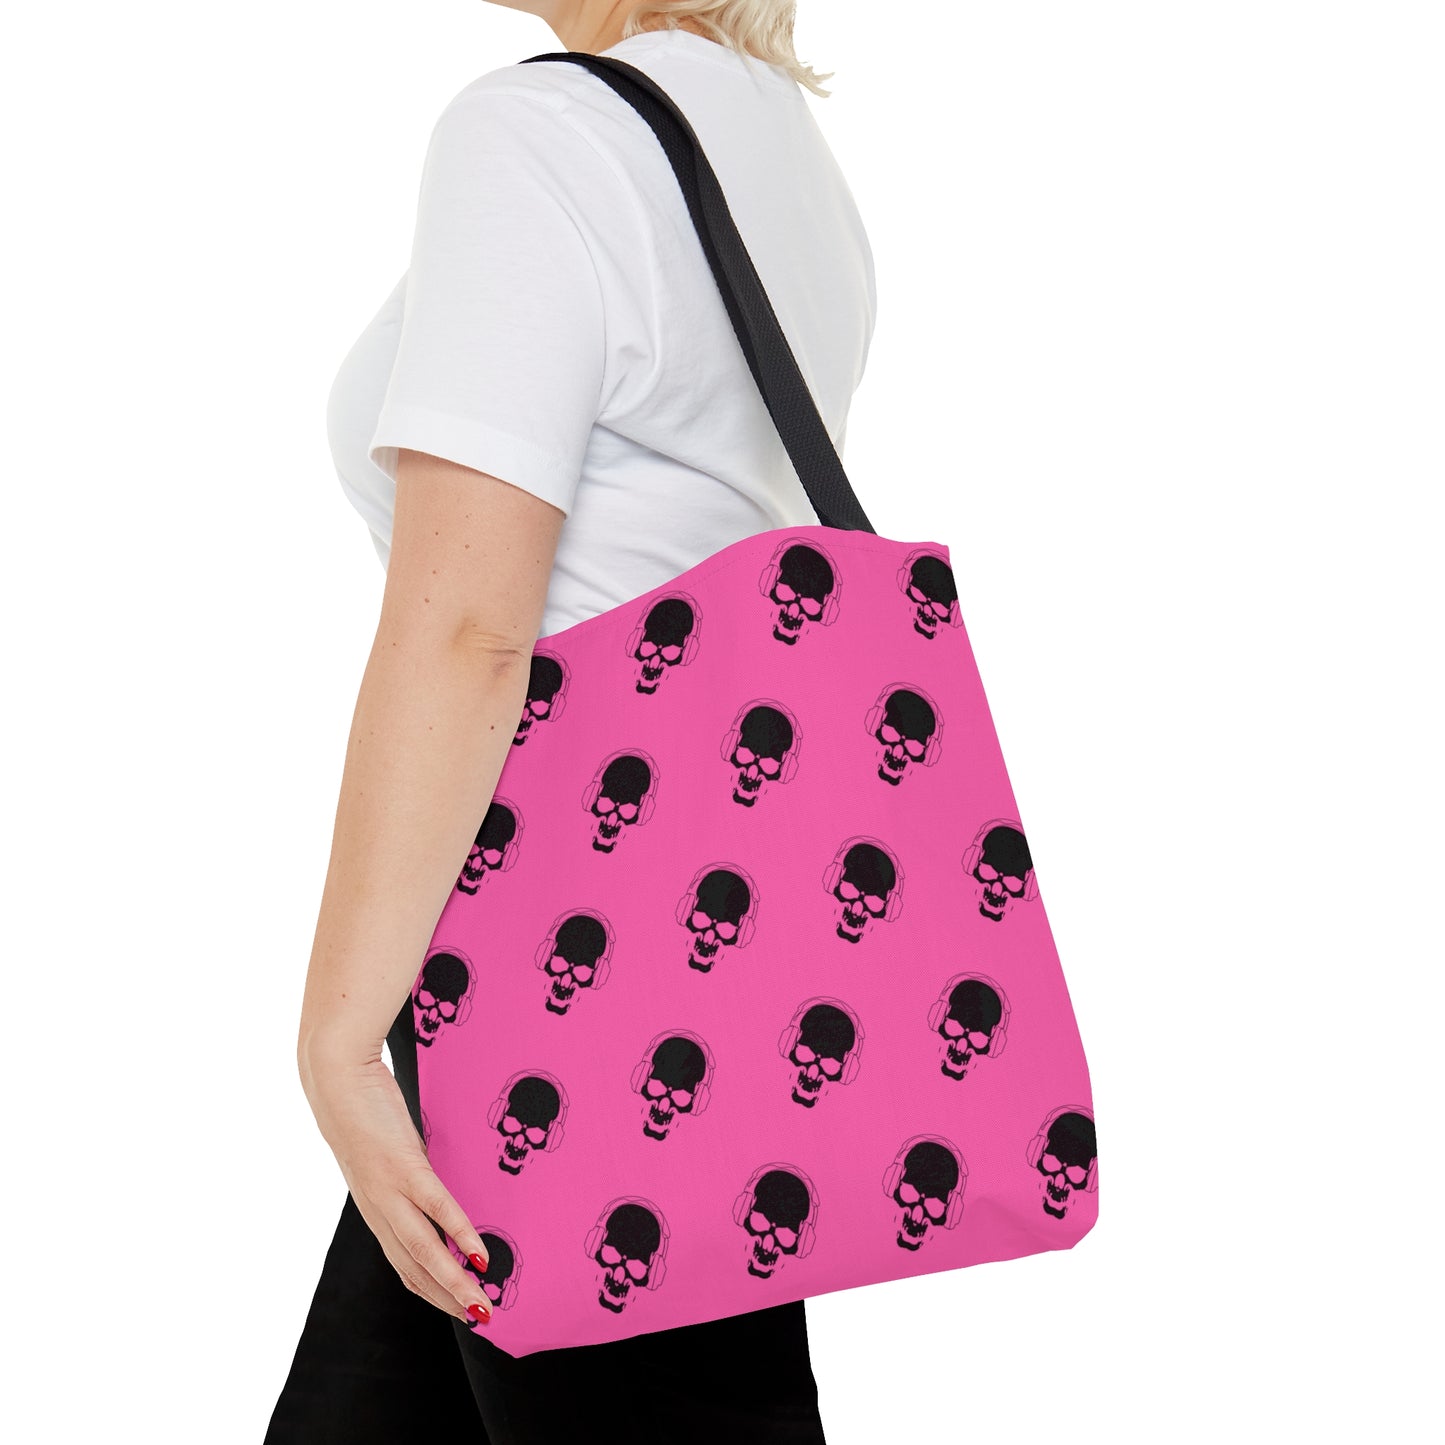 Pink and Black Skull Tote Bag